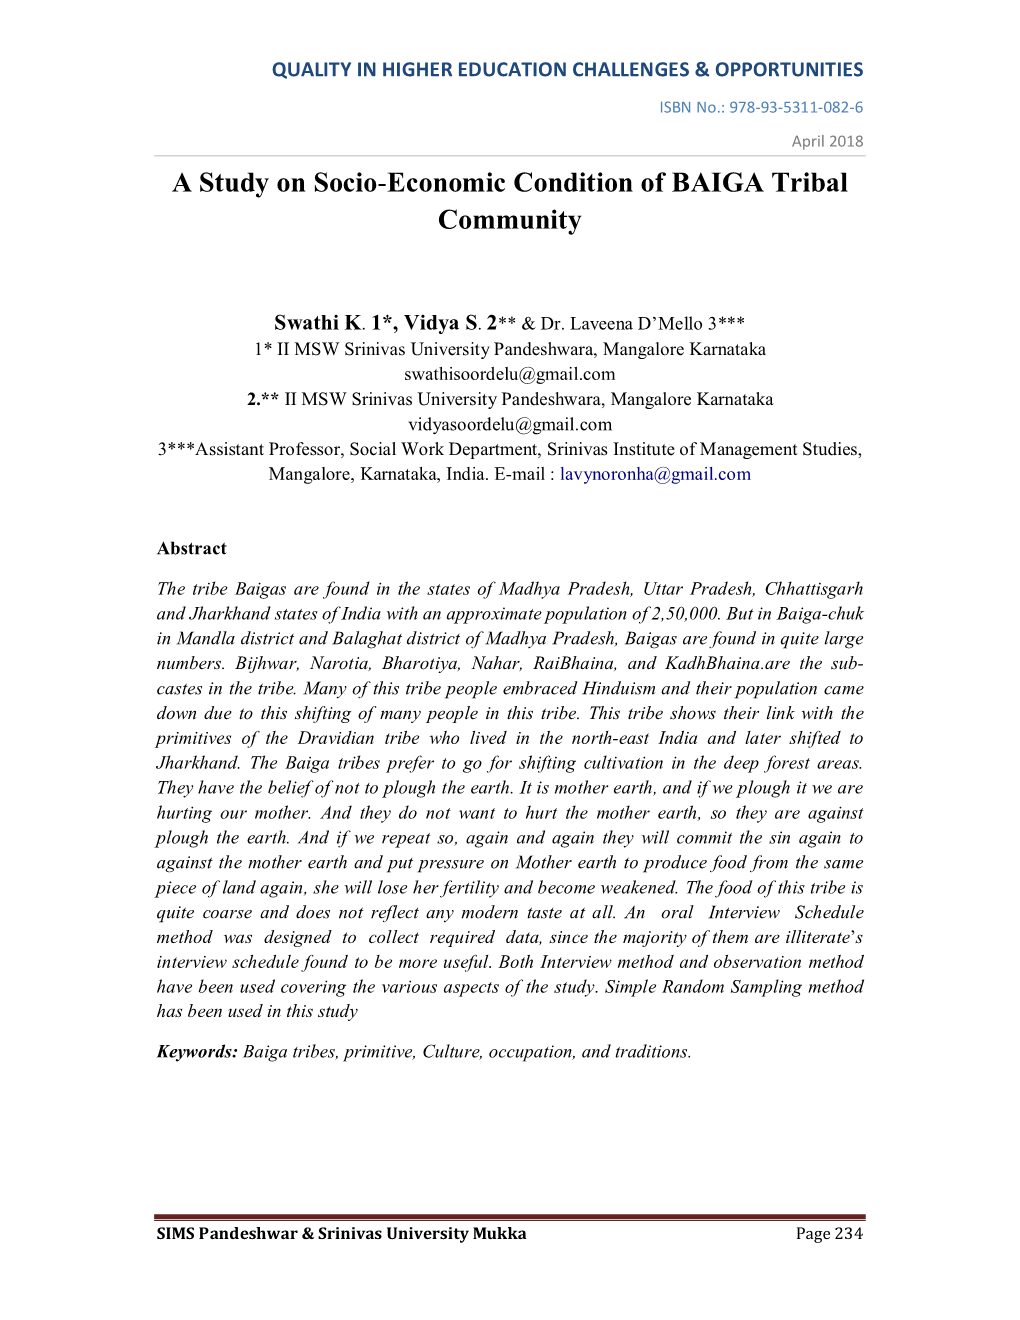 A Study on Socio-Economic Condition of BAIGA Tribal Community